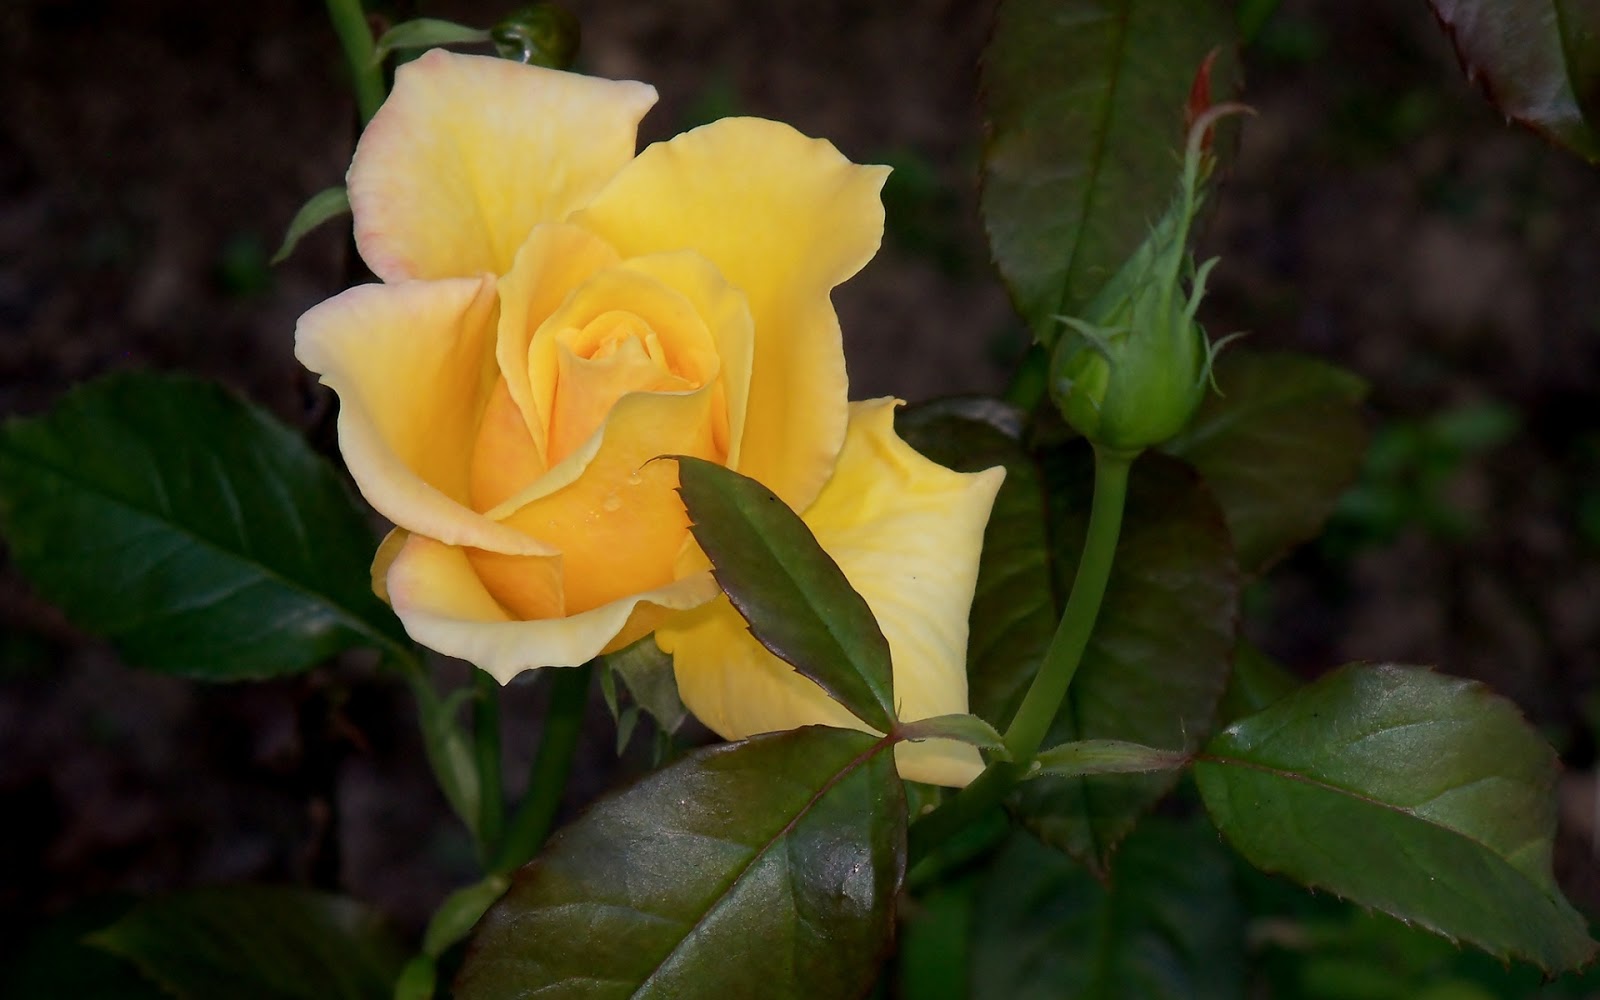 http://2.bp.blogspot.com/-3XISgz3W1cQ/UVlSYKa6xII/AAAAAAAAY-k/jAz4htv0XYI/s1600/yellow-rose-bud-leafs.jpg